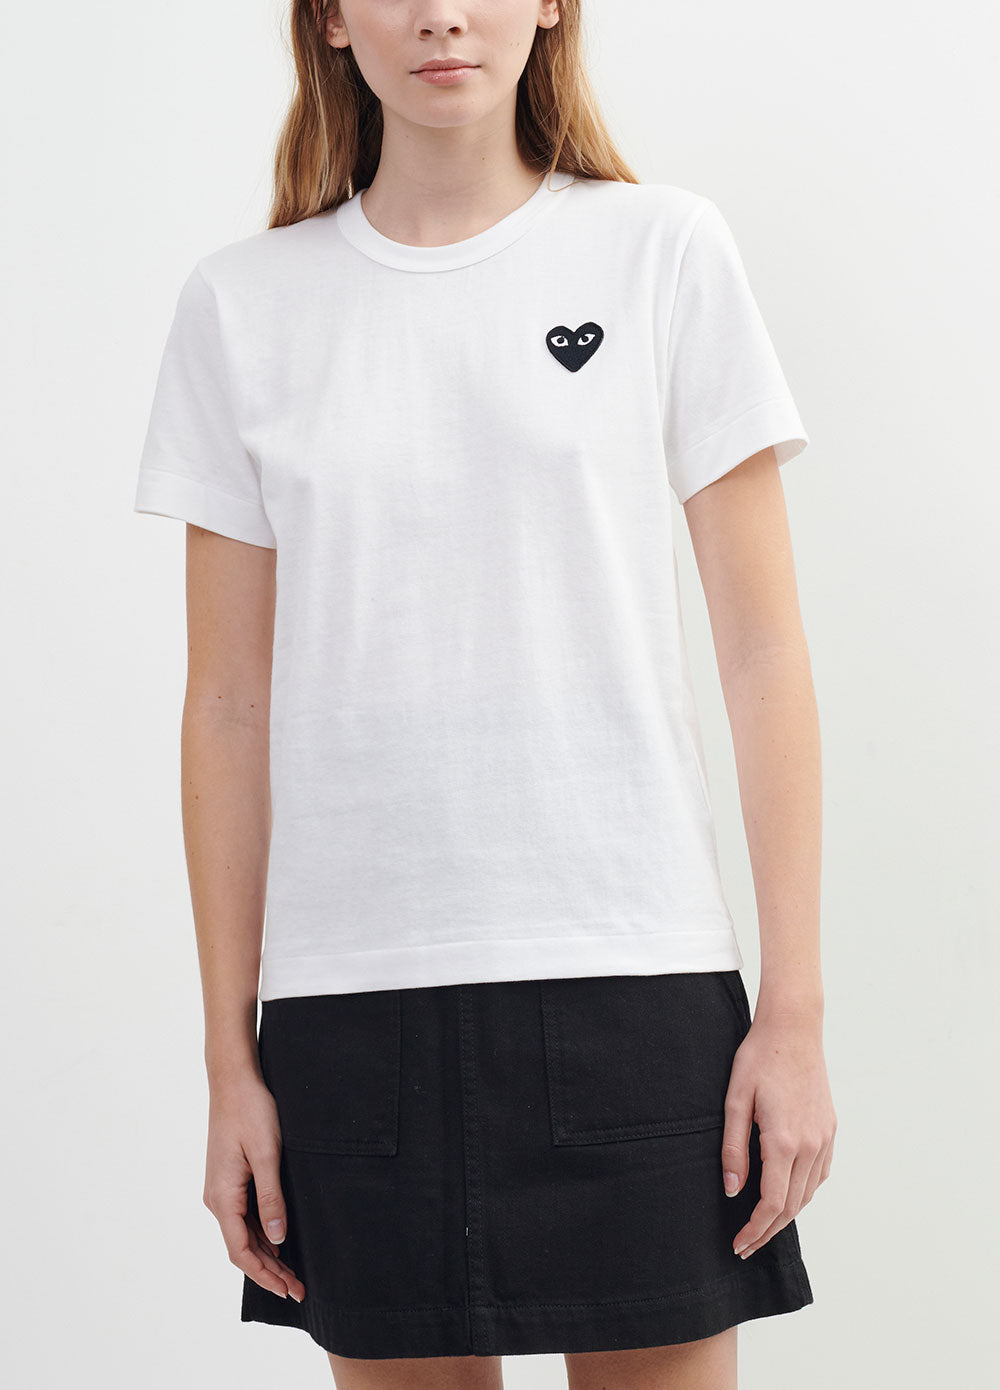 T063 Black Heart T-shirt